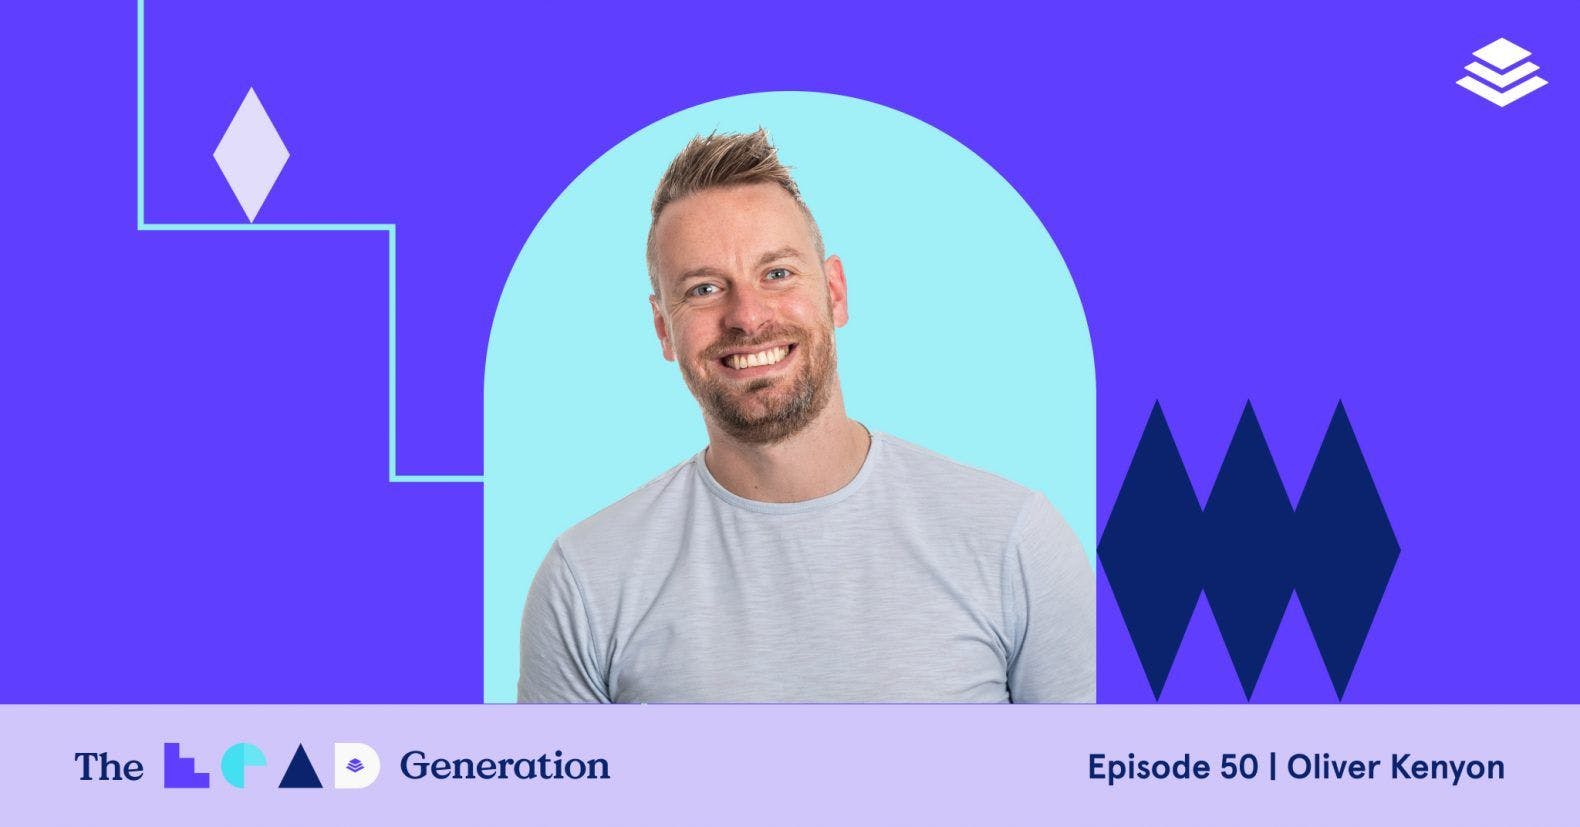 The Lead Generation Podcast Episode 50: Oliver Kenyon